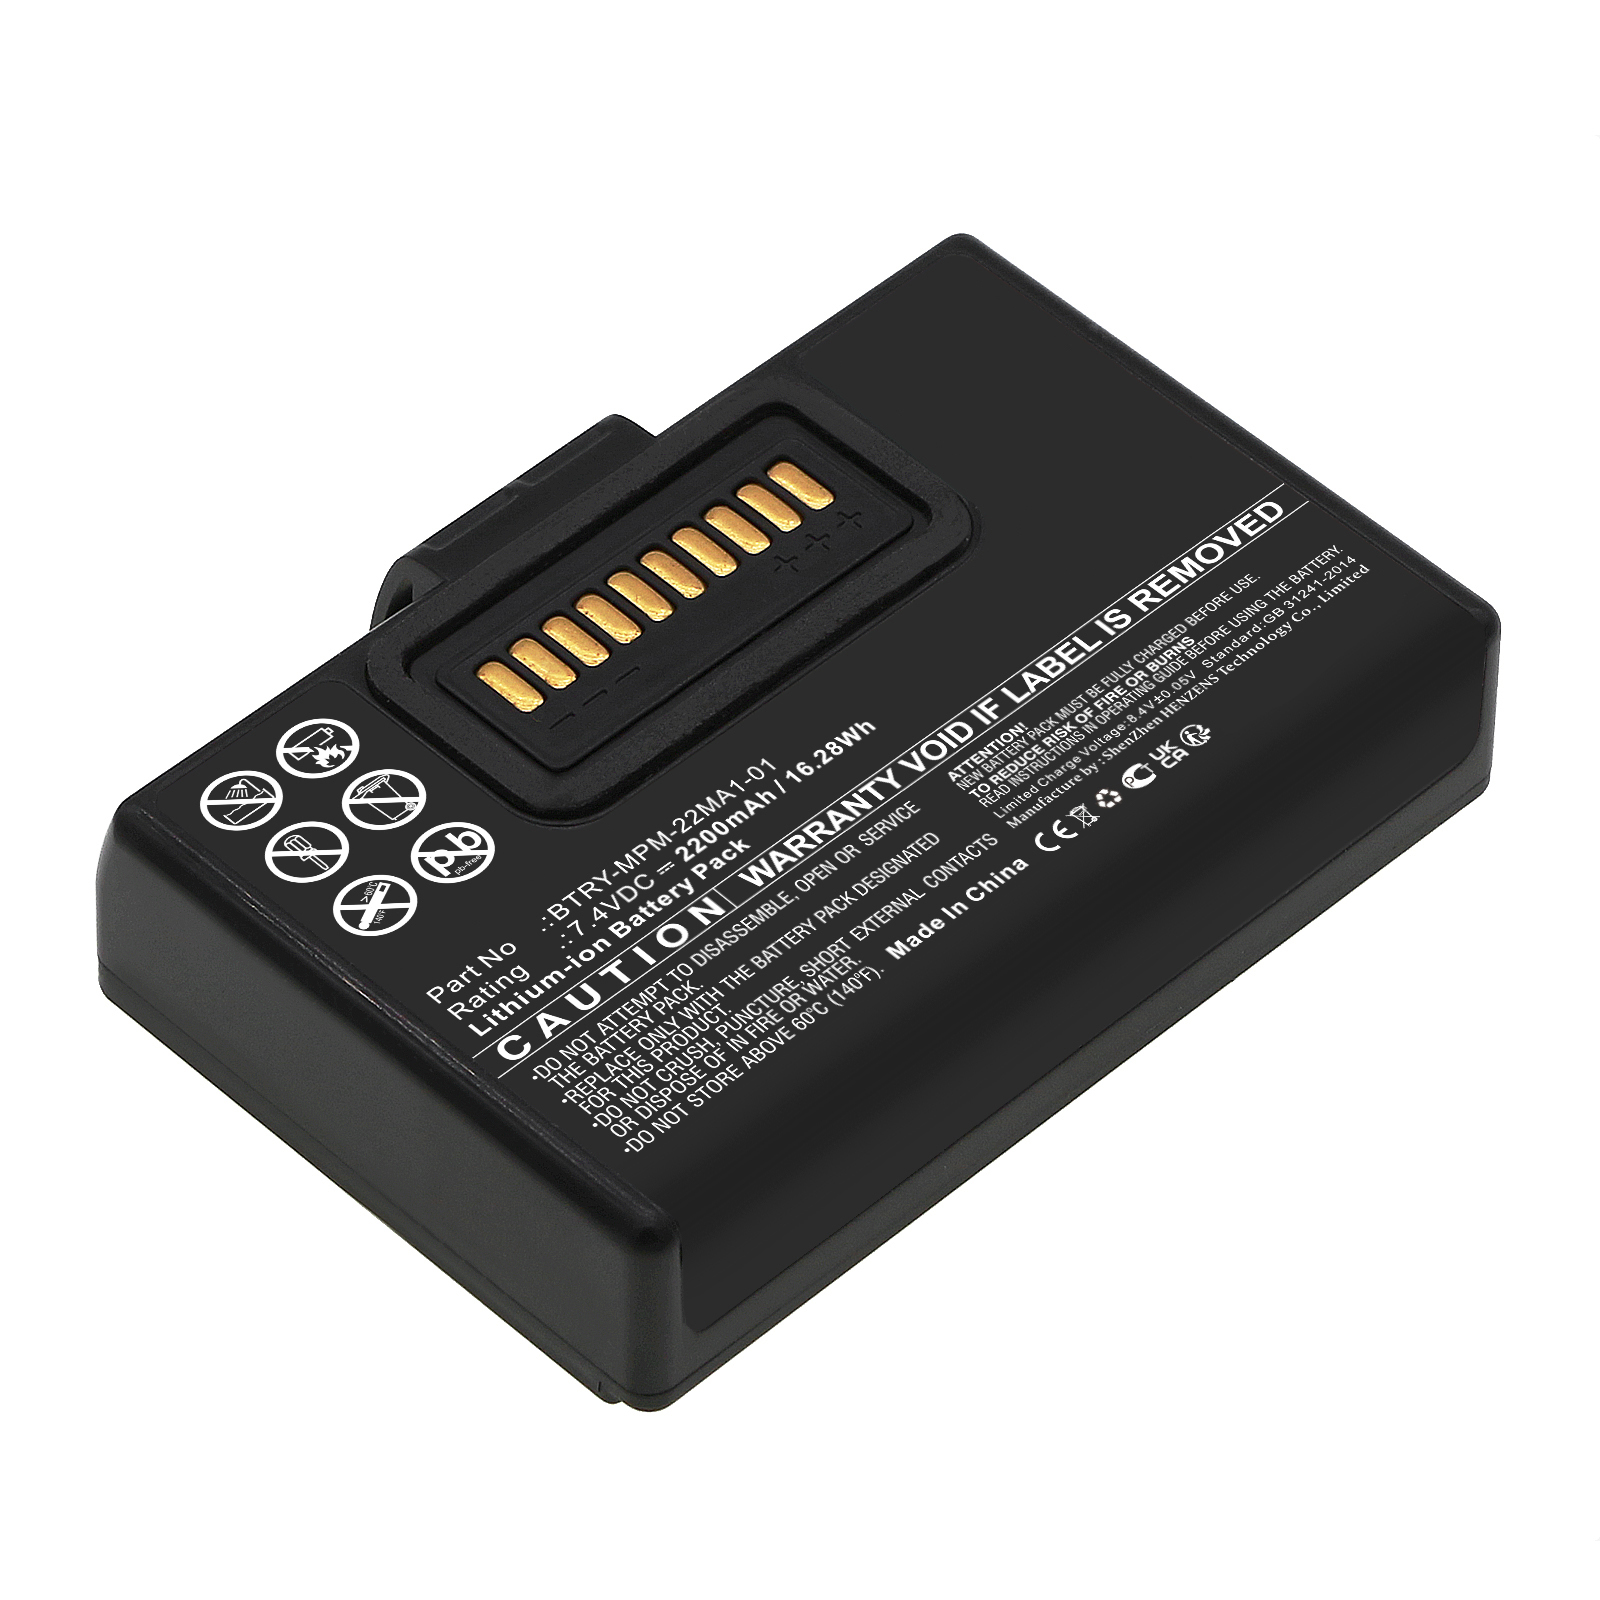 Synergy Digital Printer Battery, Compatible with Zebra BTRY-MPM-22MA1-01 Printer Battery (Li-ion, 7.4V, 2200mAh)